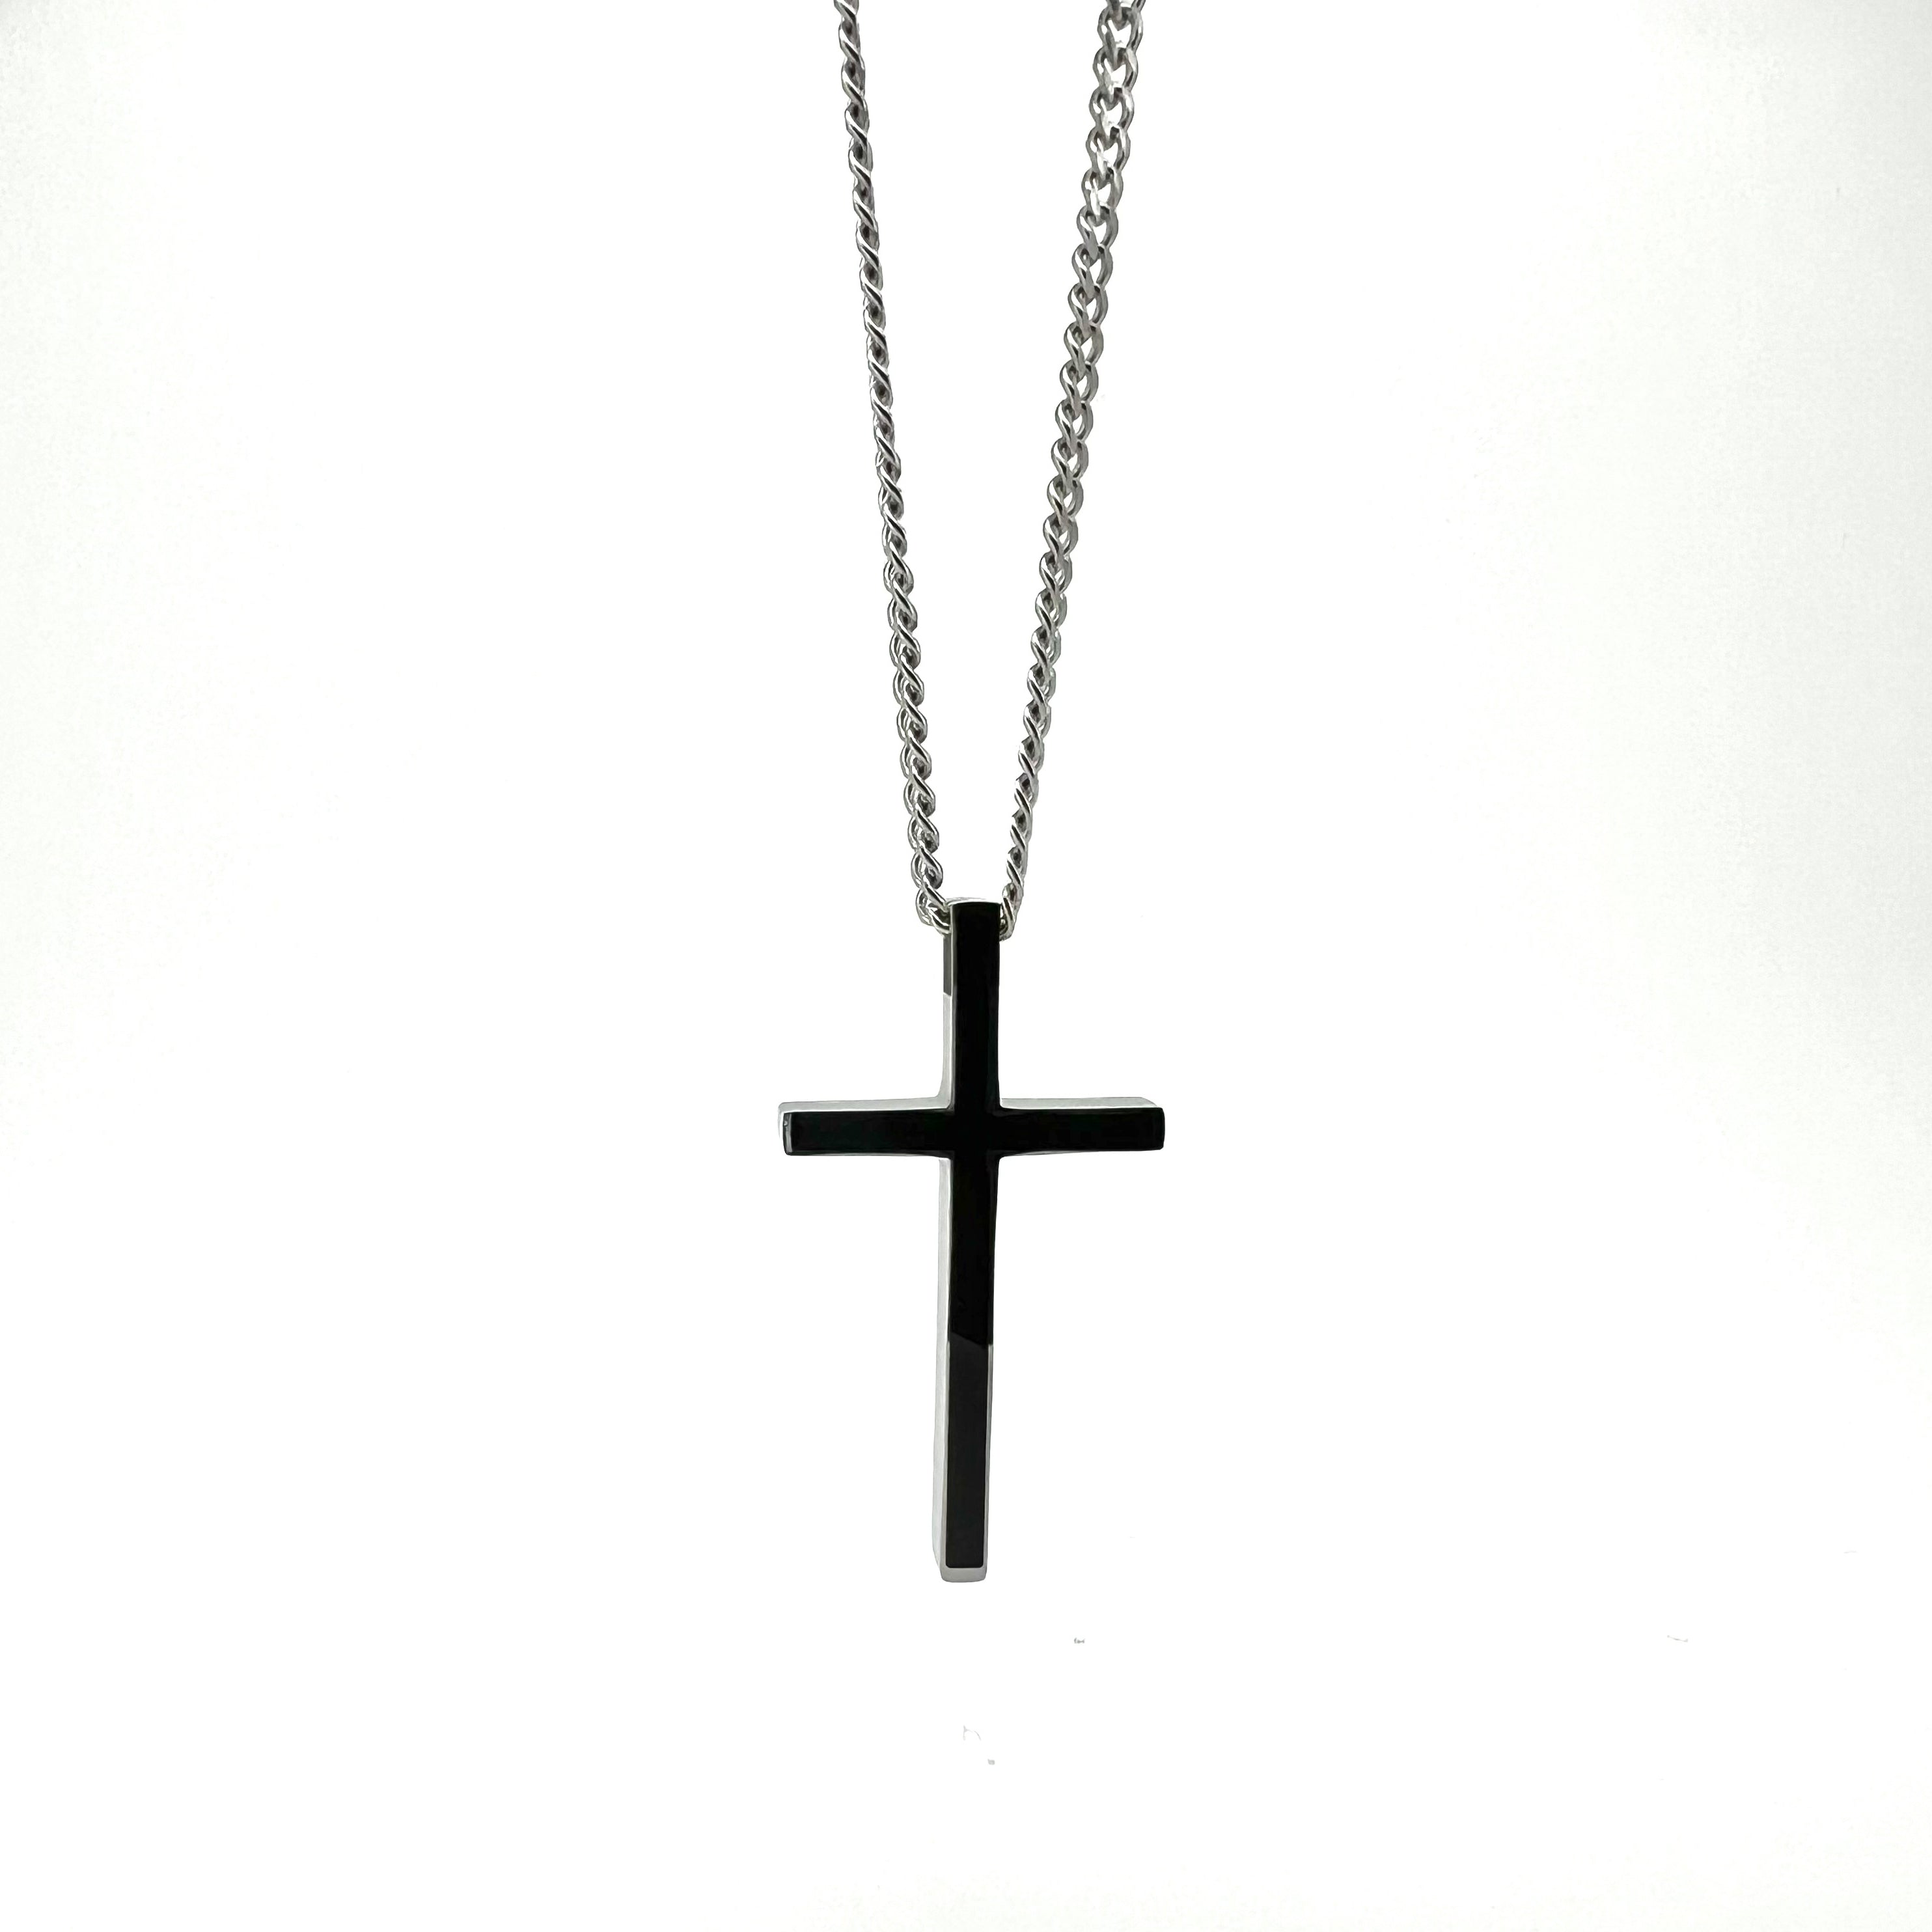 Artair Black Crucifix Pendant with Link Chain